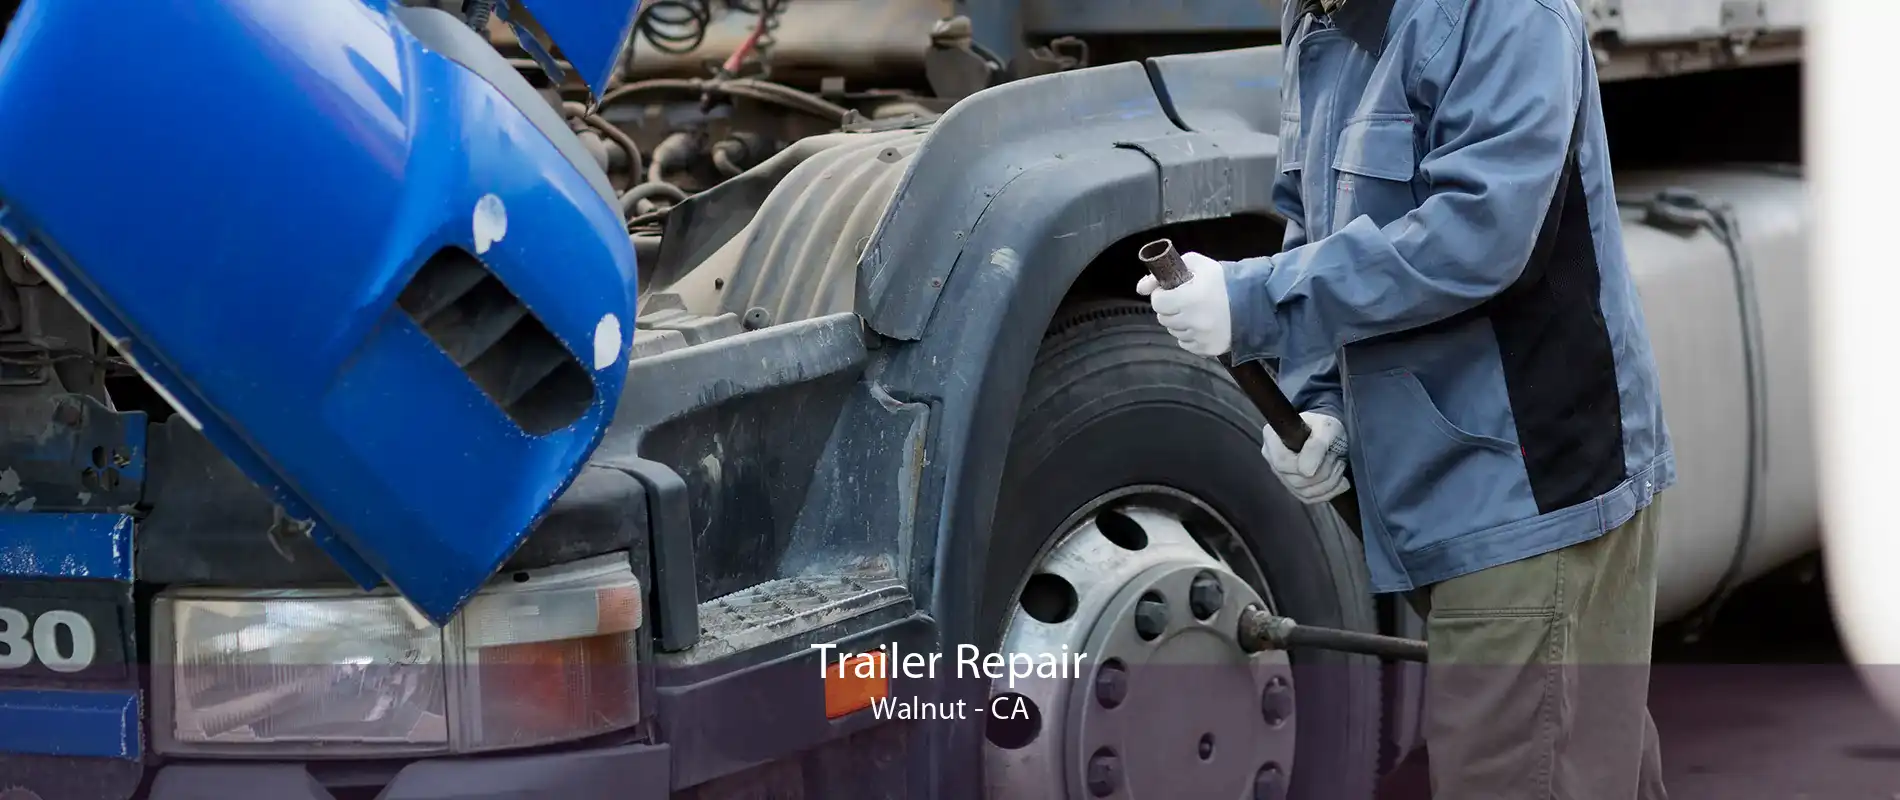 Trailer Repair Walnut - CA